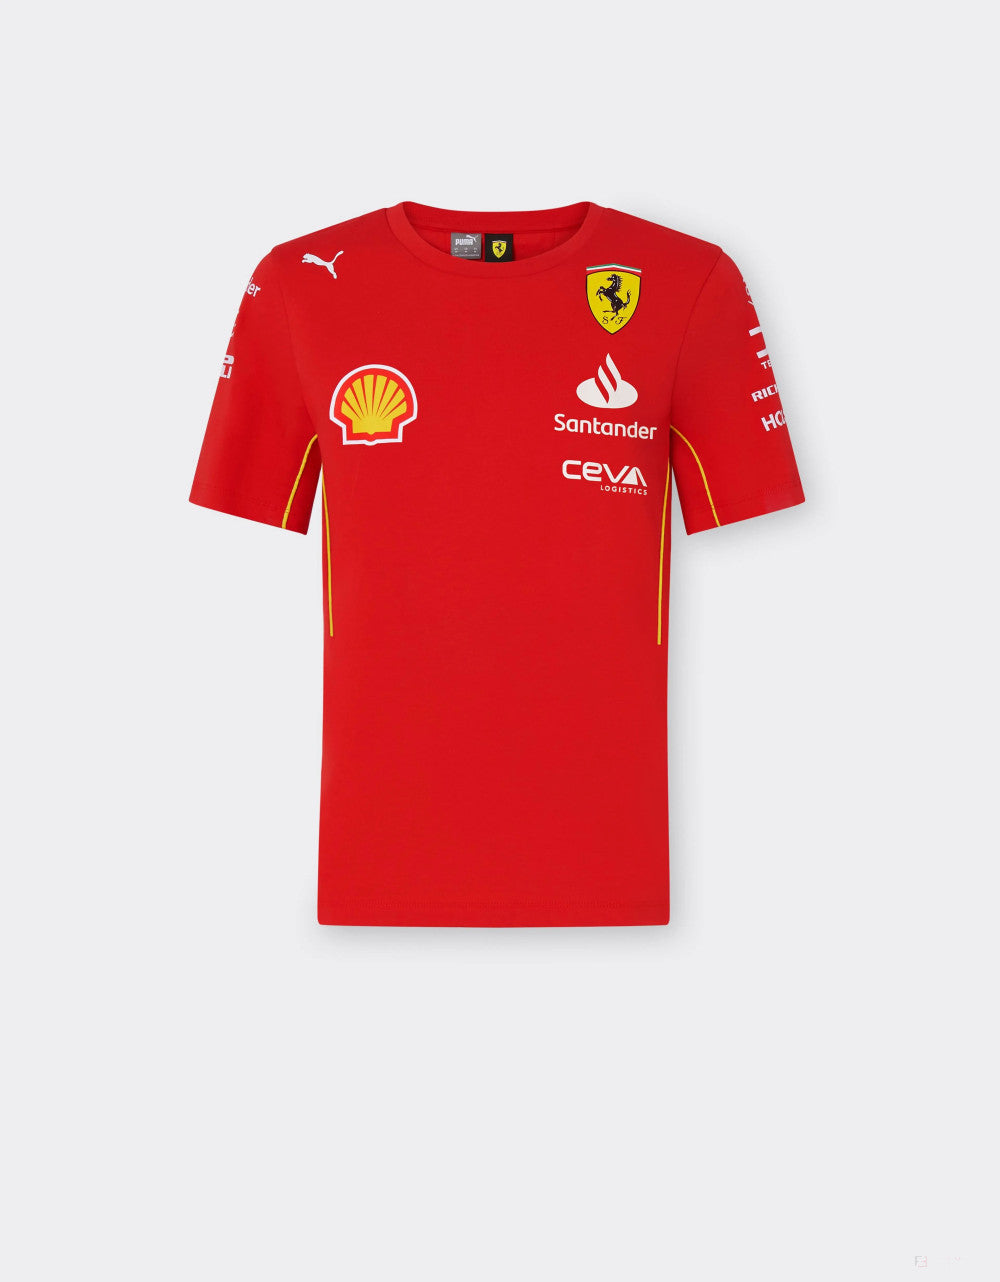 Ferrari t-shirt, Puma, team, damen, rot, 2024